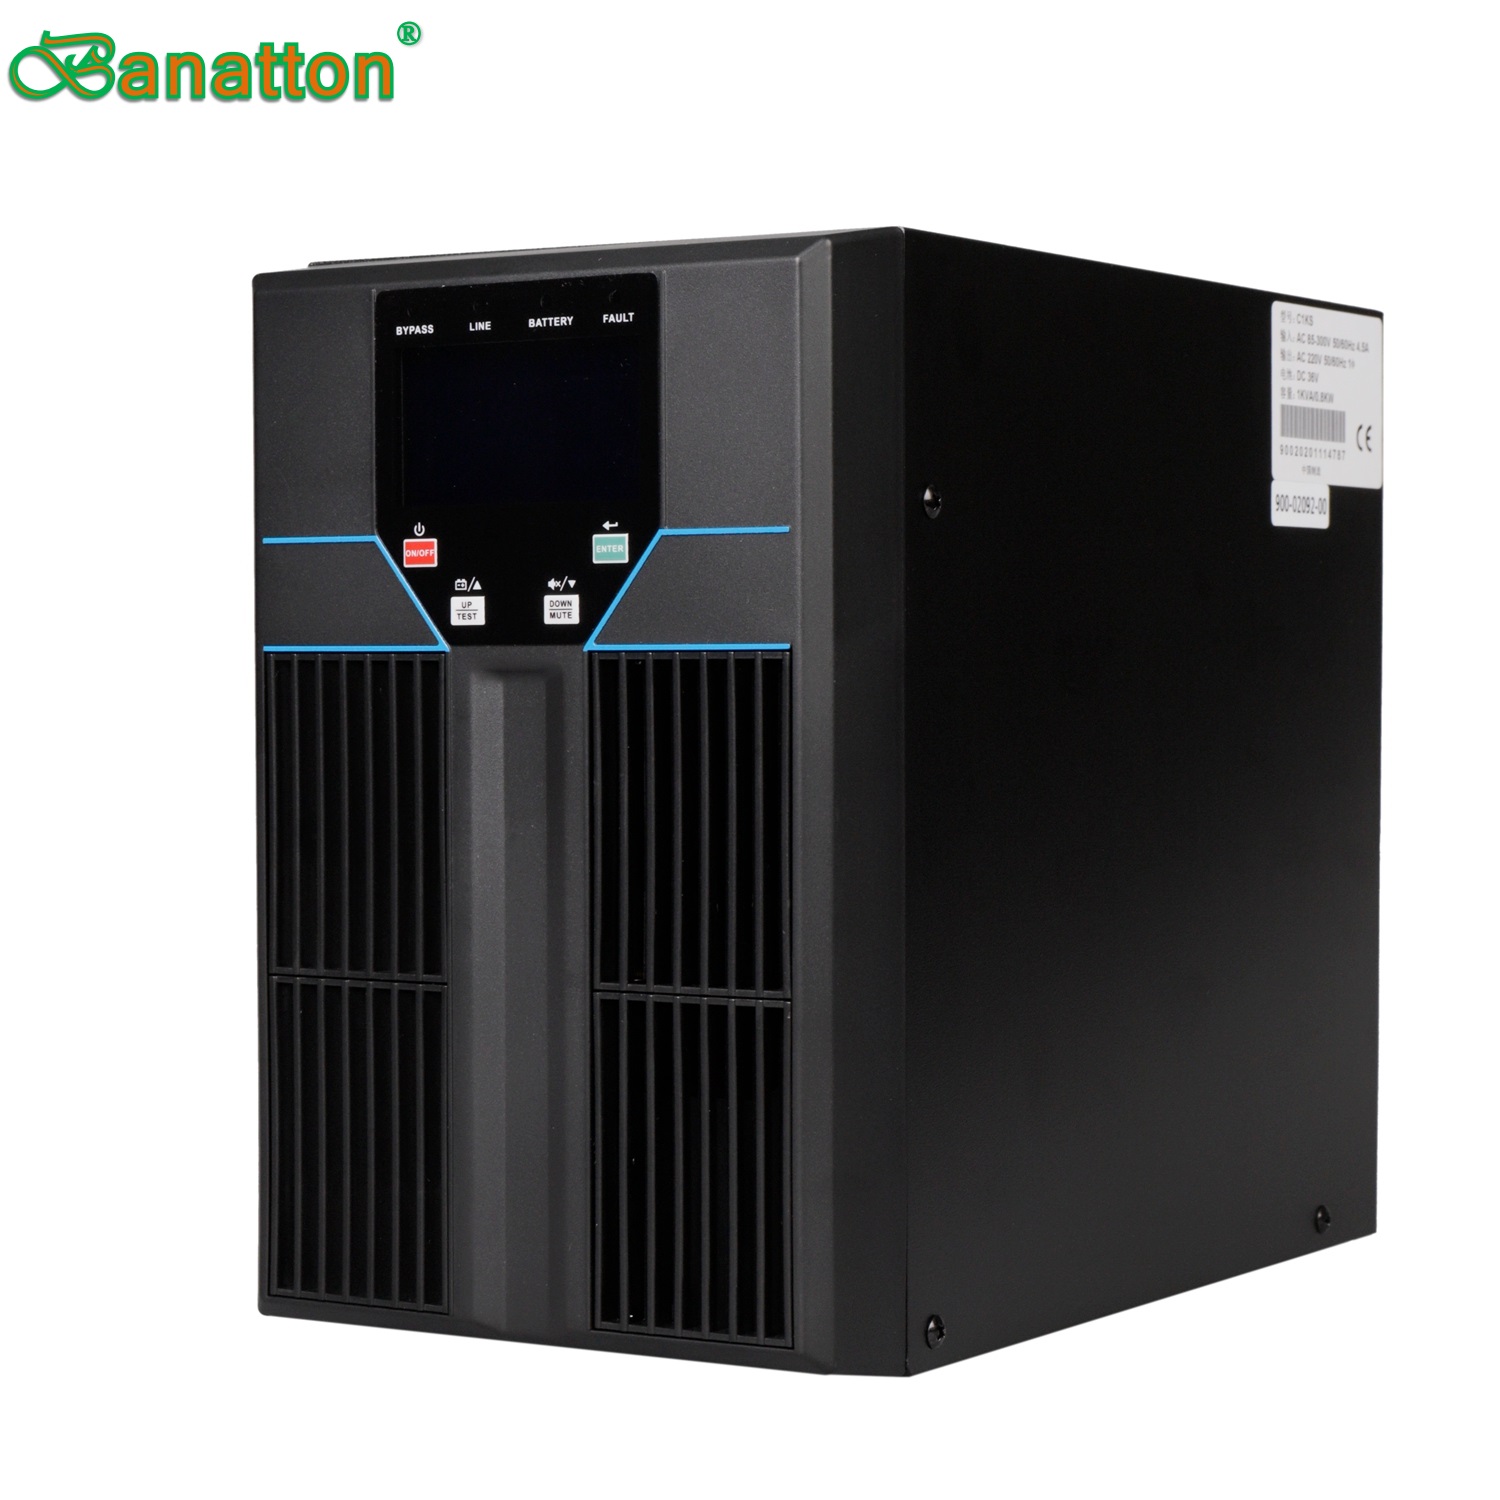 Banatton 1~3K-Li Online UPS Akumulator litowo-jonowy 220V/230V/240V PF0.9 IEC62040 Nieprzerwany zasilacz